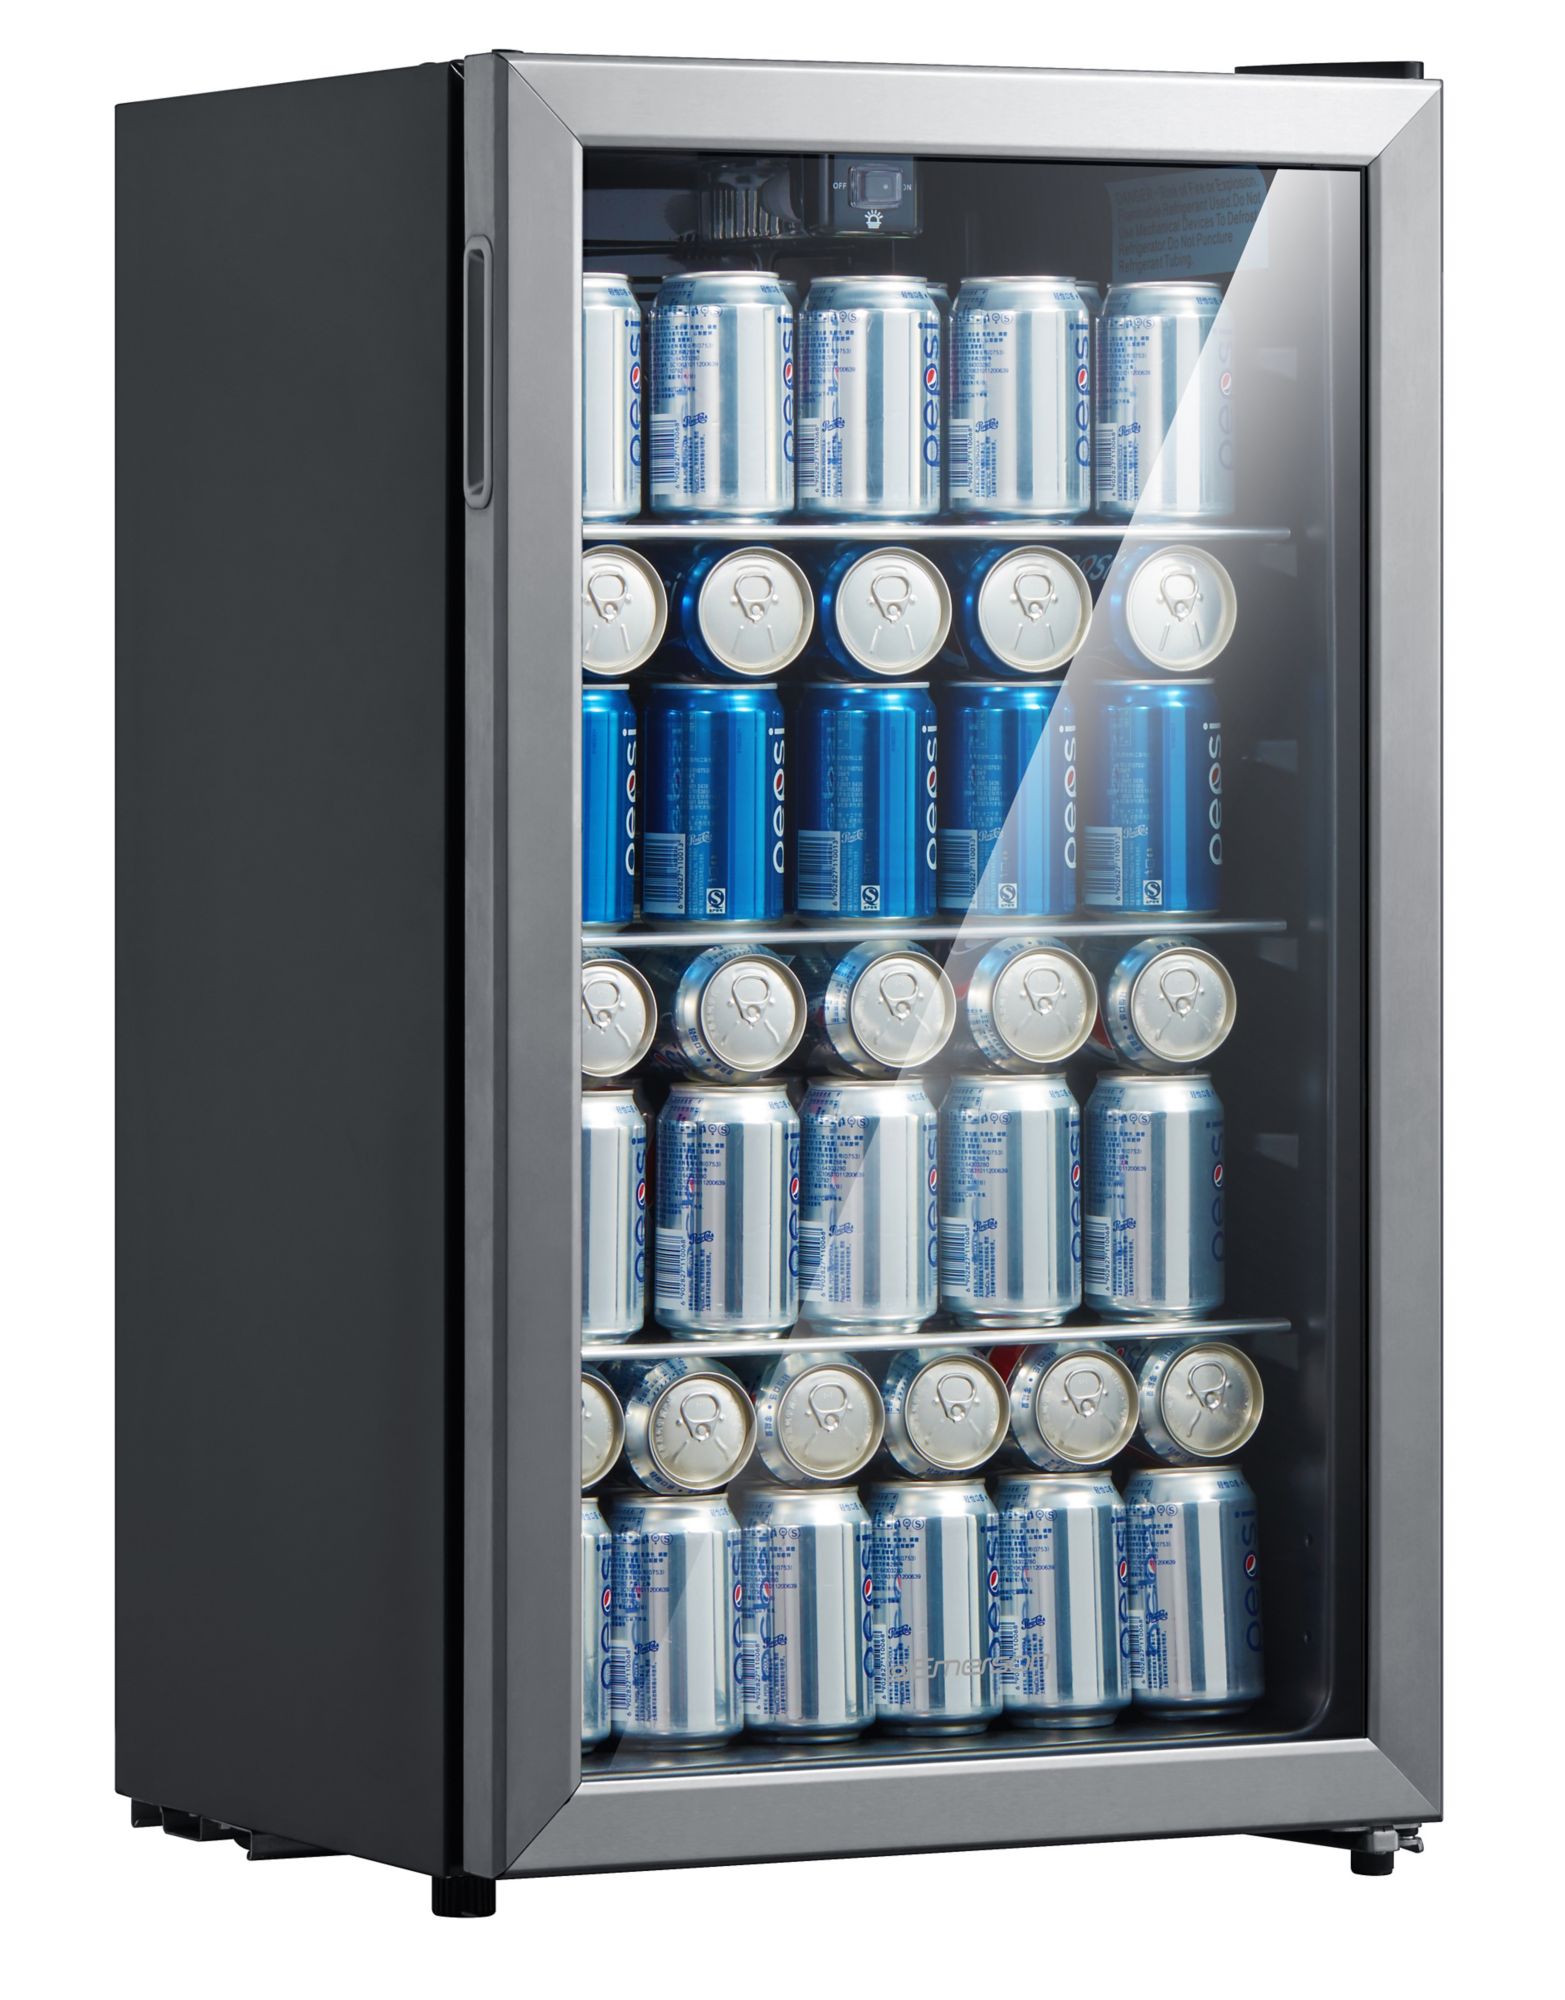 Frigidaire 7.5 Cu. ft. Refrigerator, Platinum Series, Stainless Look  (EFR780-6COM) - Yahoo Shopping